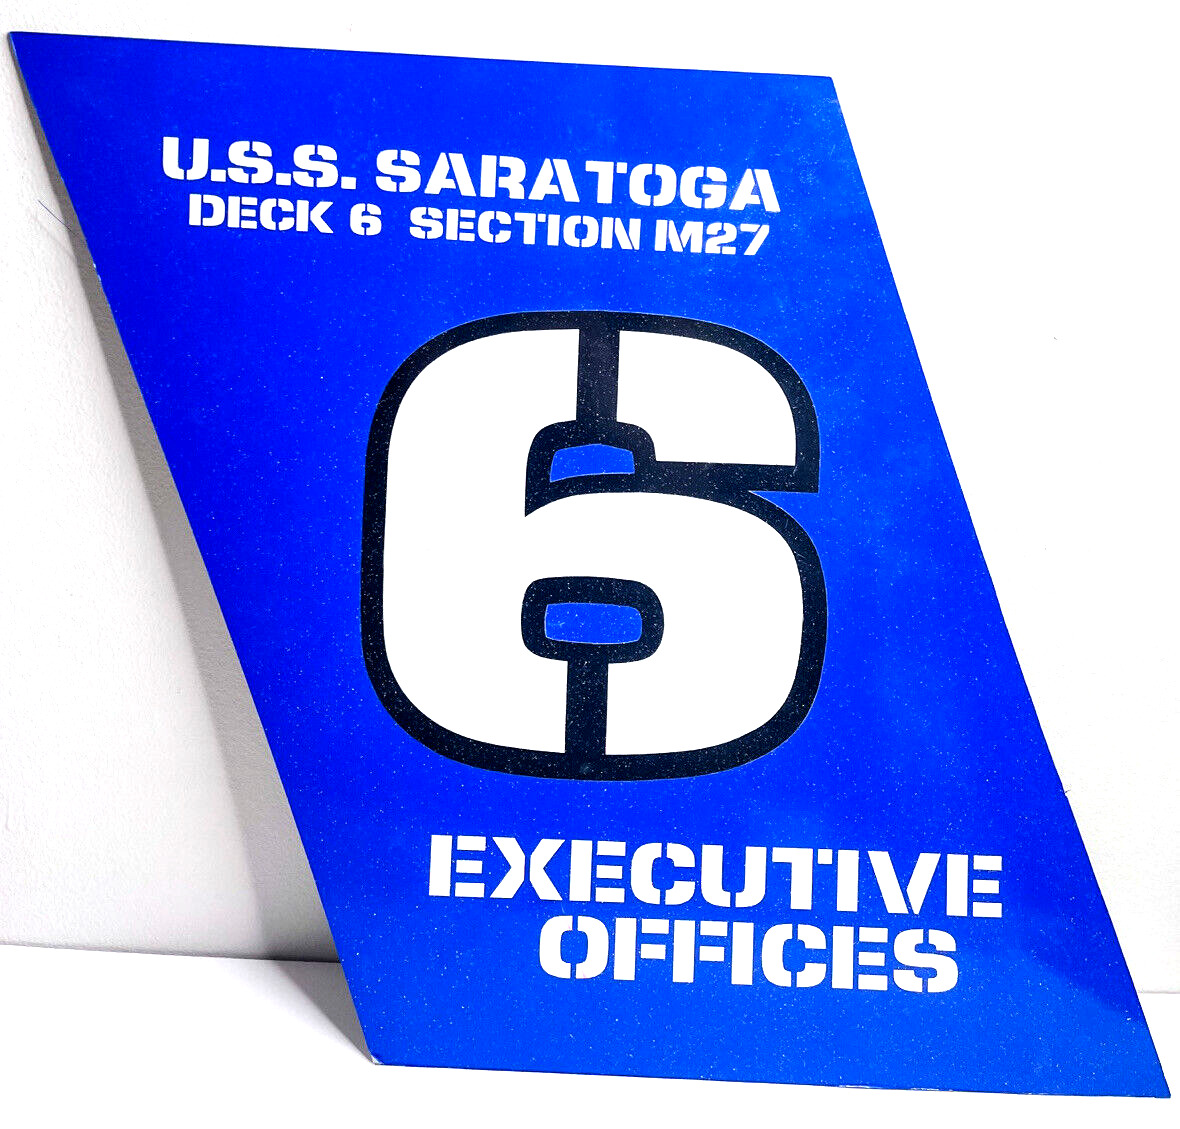 NAVY U.S.S. SARATOGA CVA-60 Deck 6 Section M27 Executive Offices air Carrier 21